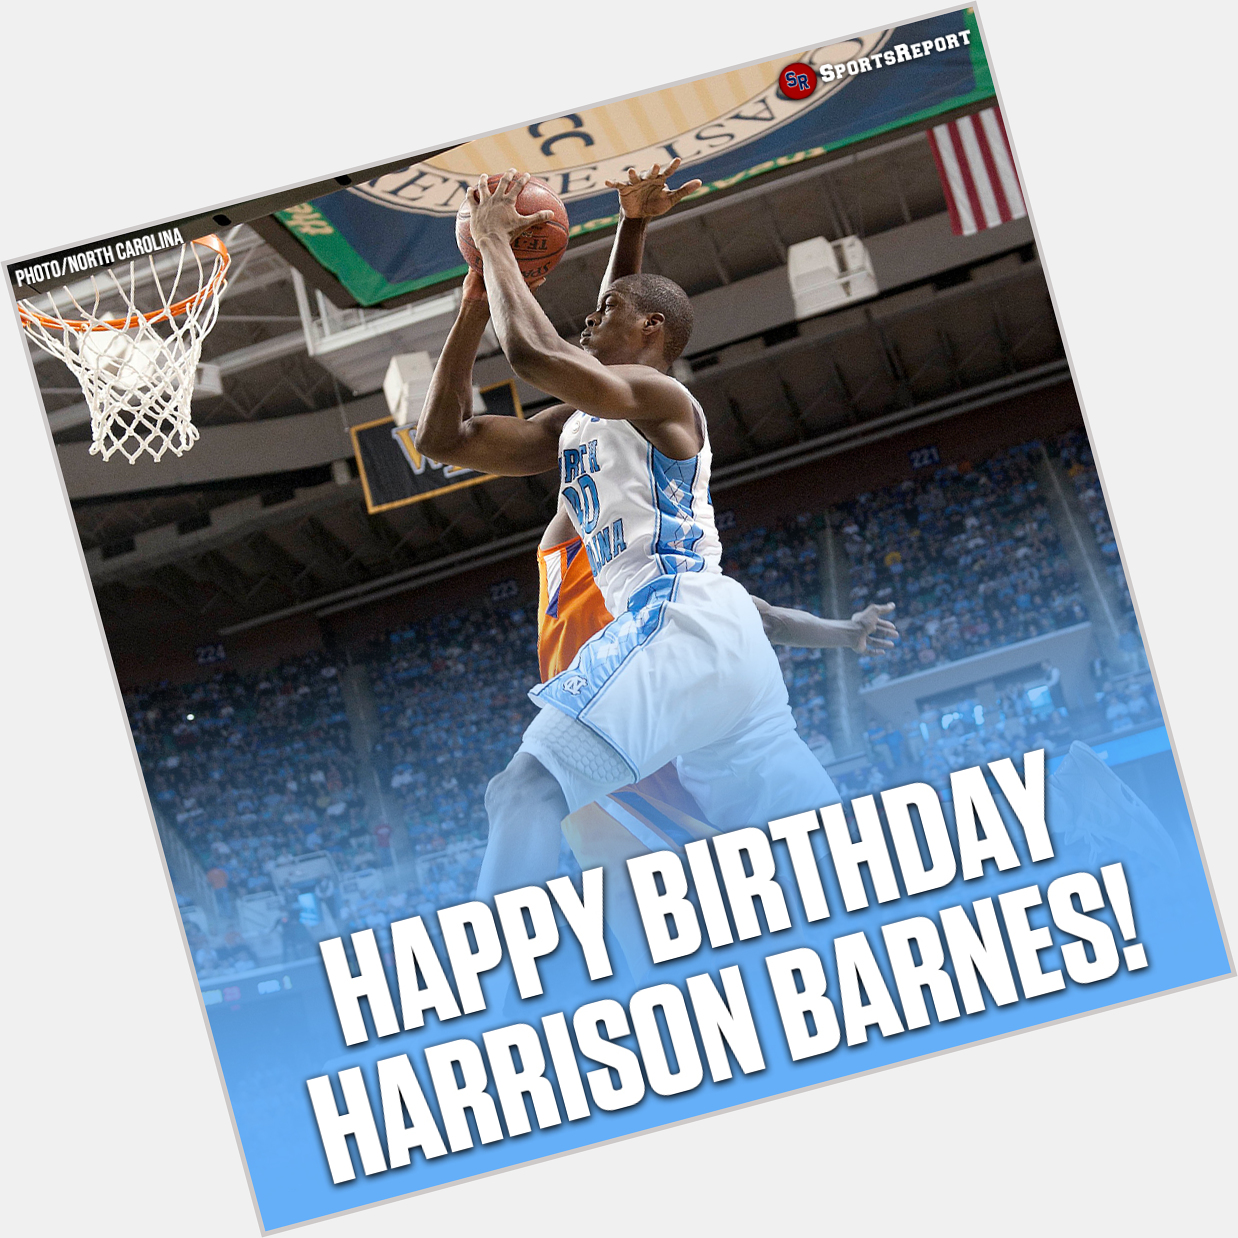  Fans, let\s wish great Harrison Barnes a Happy Birthday! 